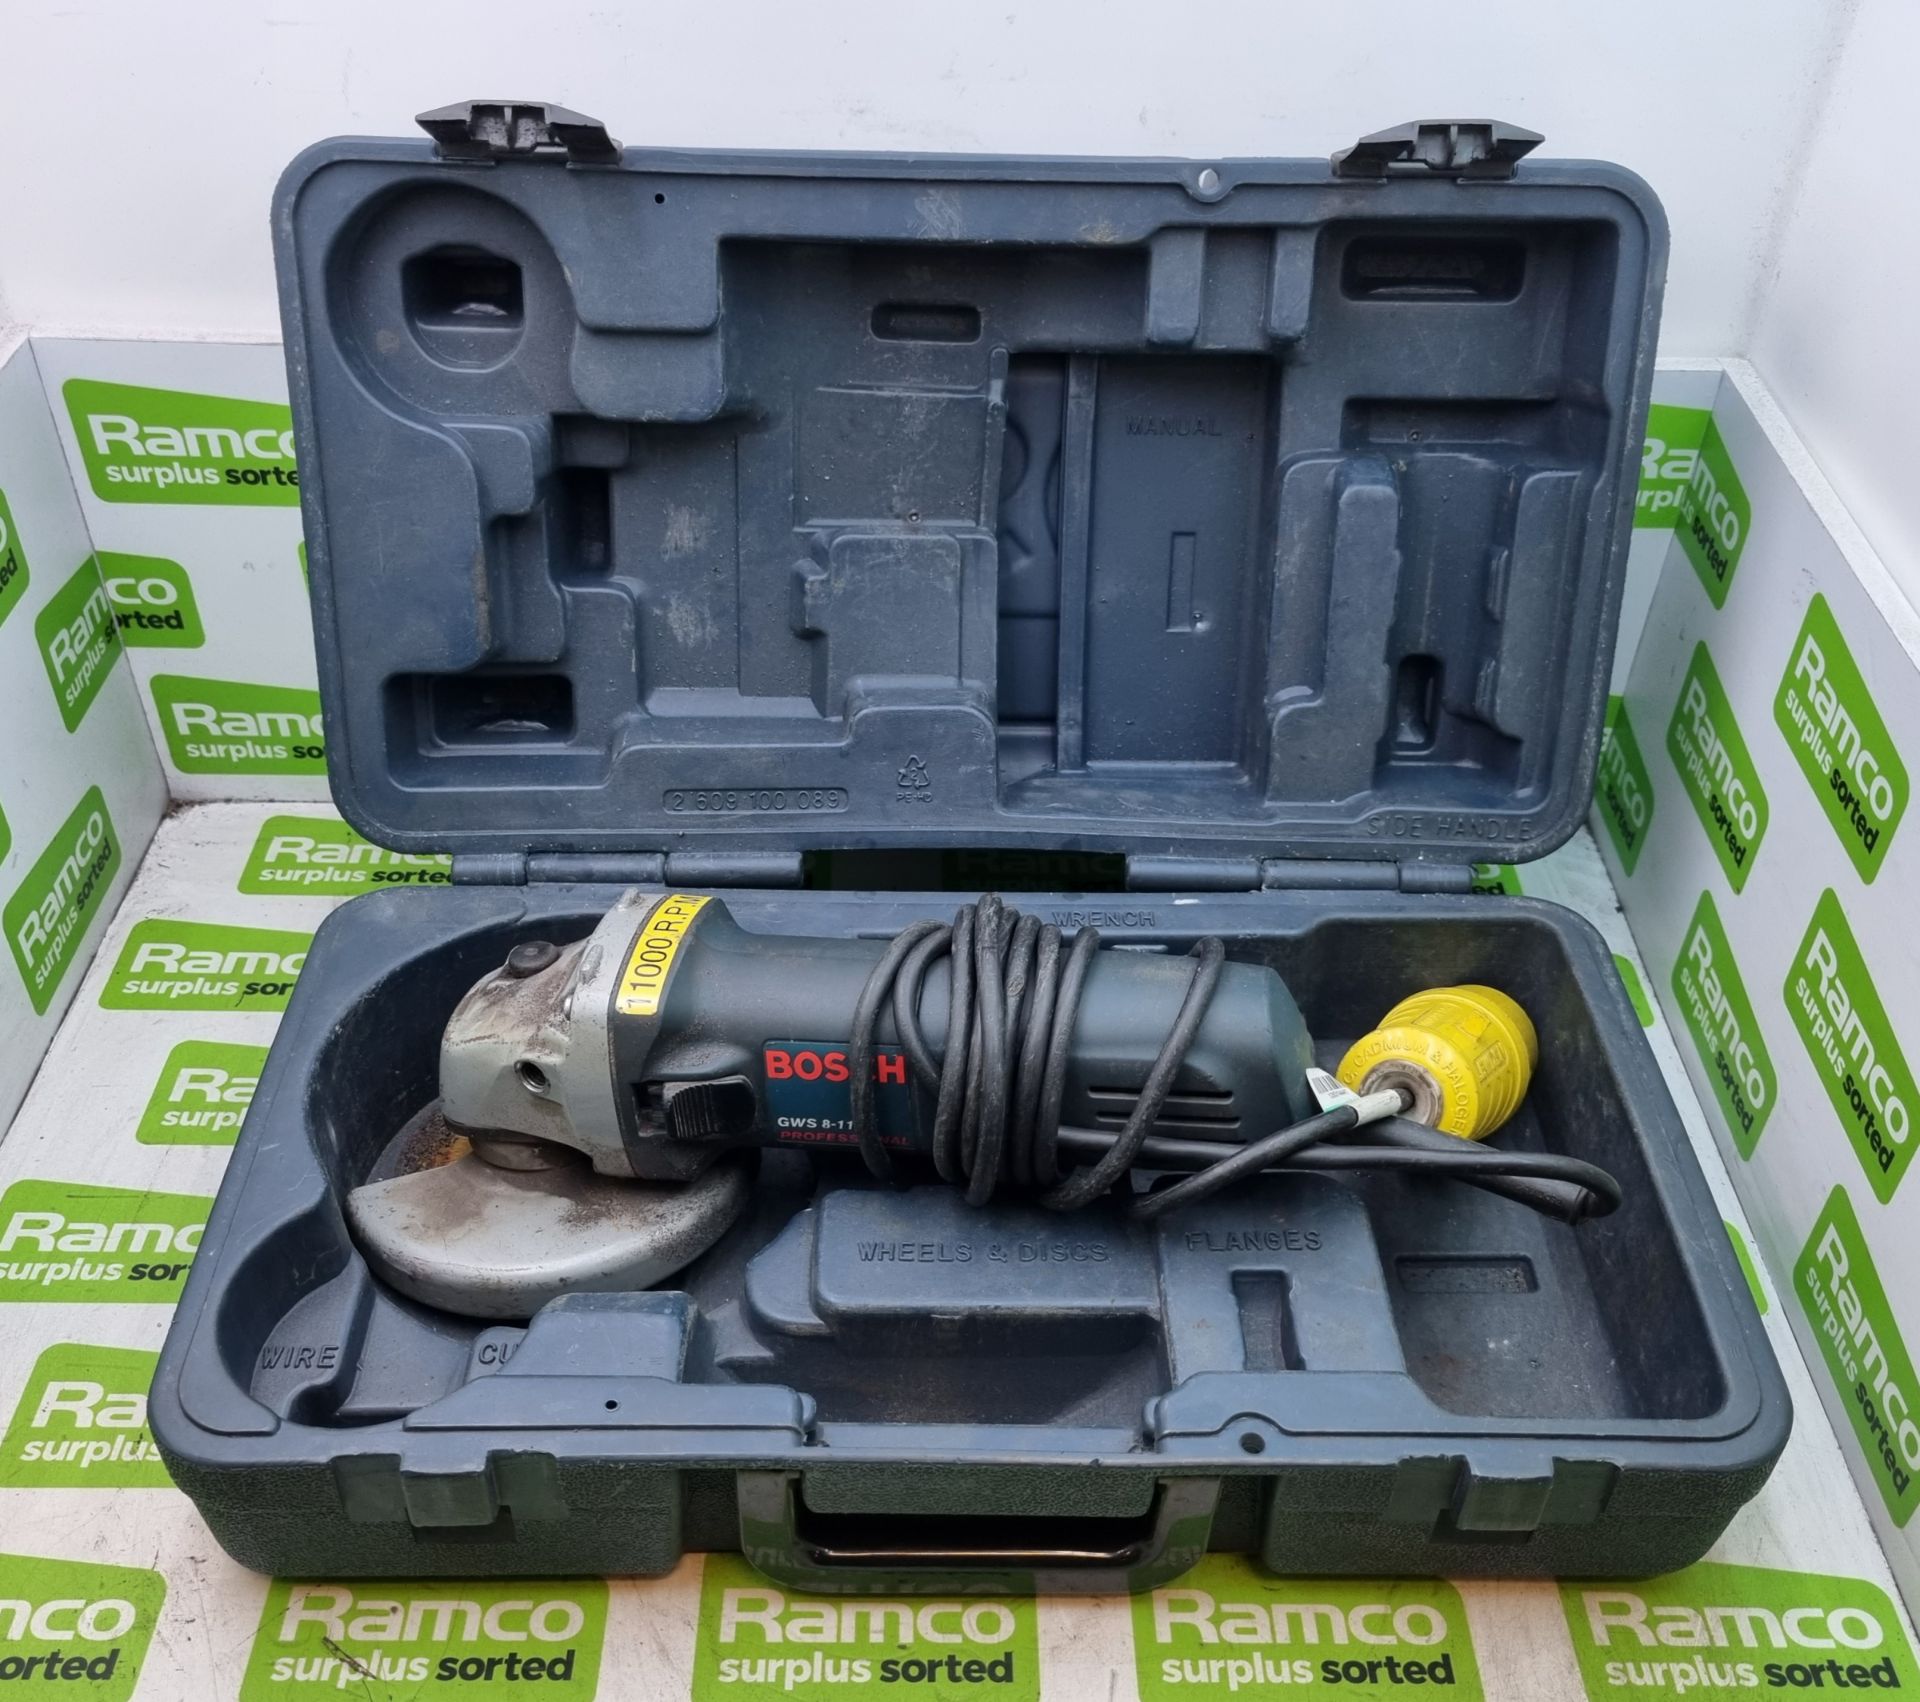 Bosch GWS 8-115C 110V angle grinder in hard plastic carry case